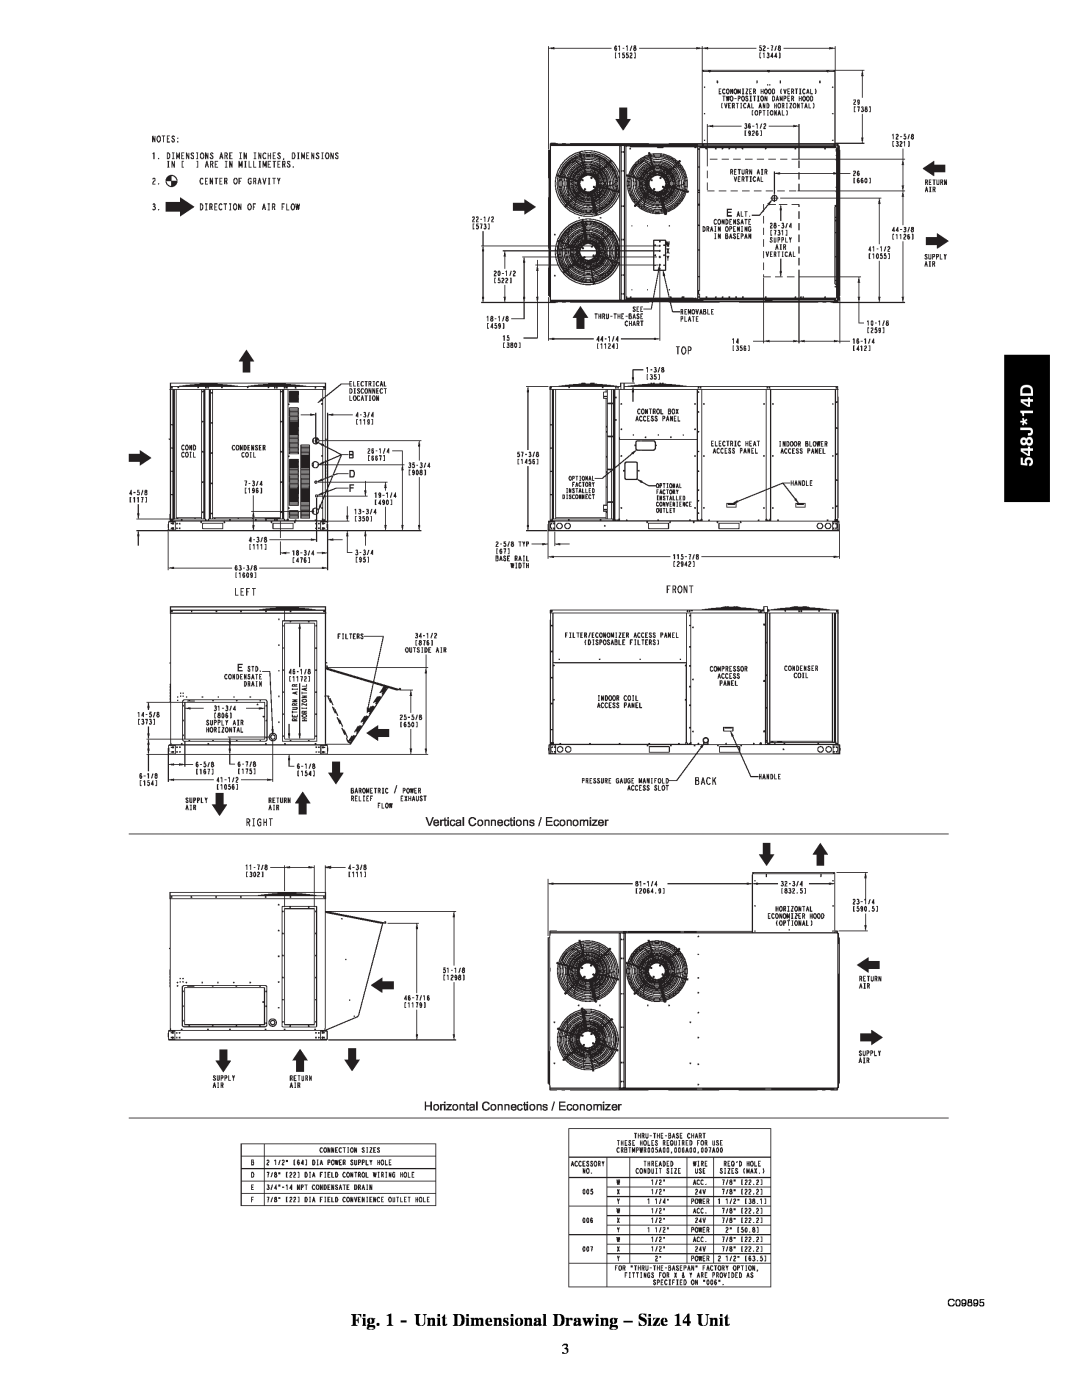 Bryant 548J*14D installation instructions Unit Dimensional Drawing - Size 14 Unit, C09895 